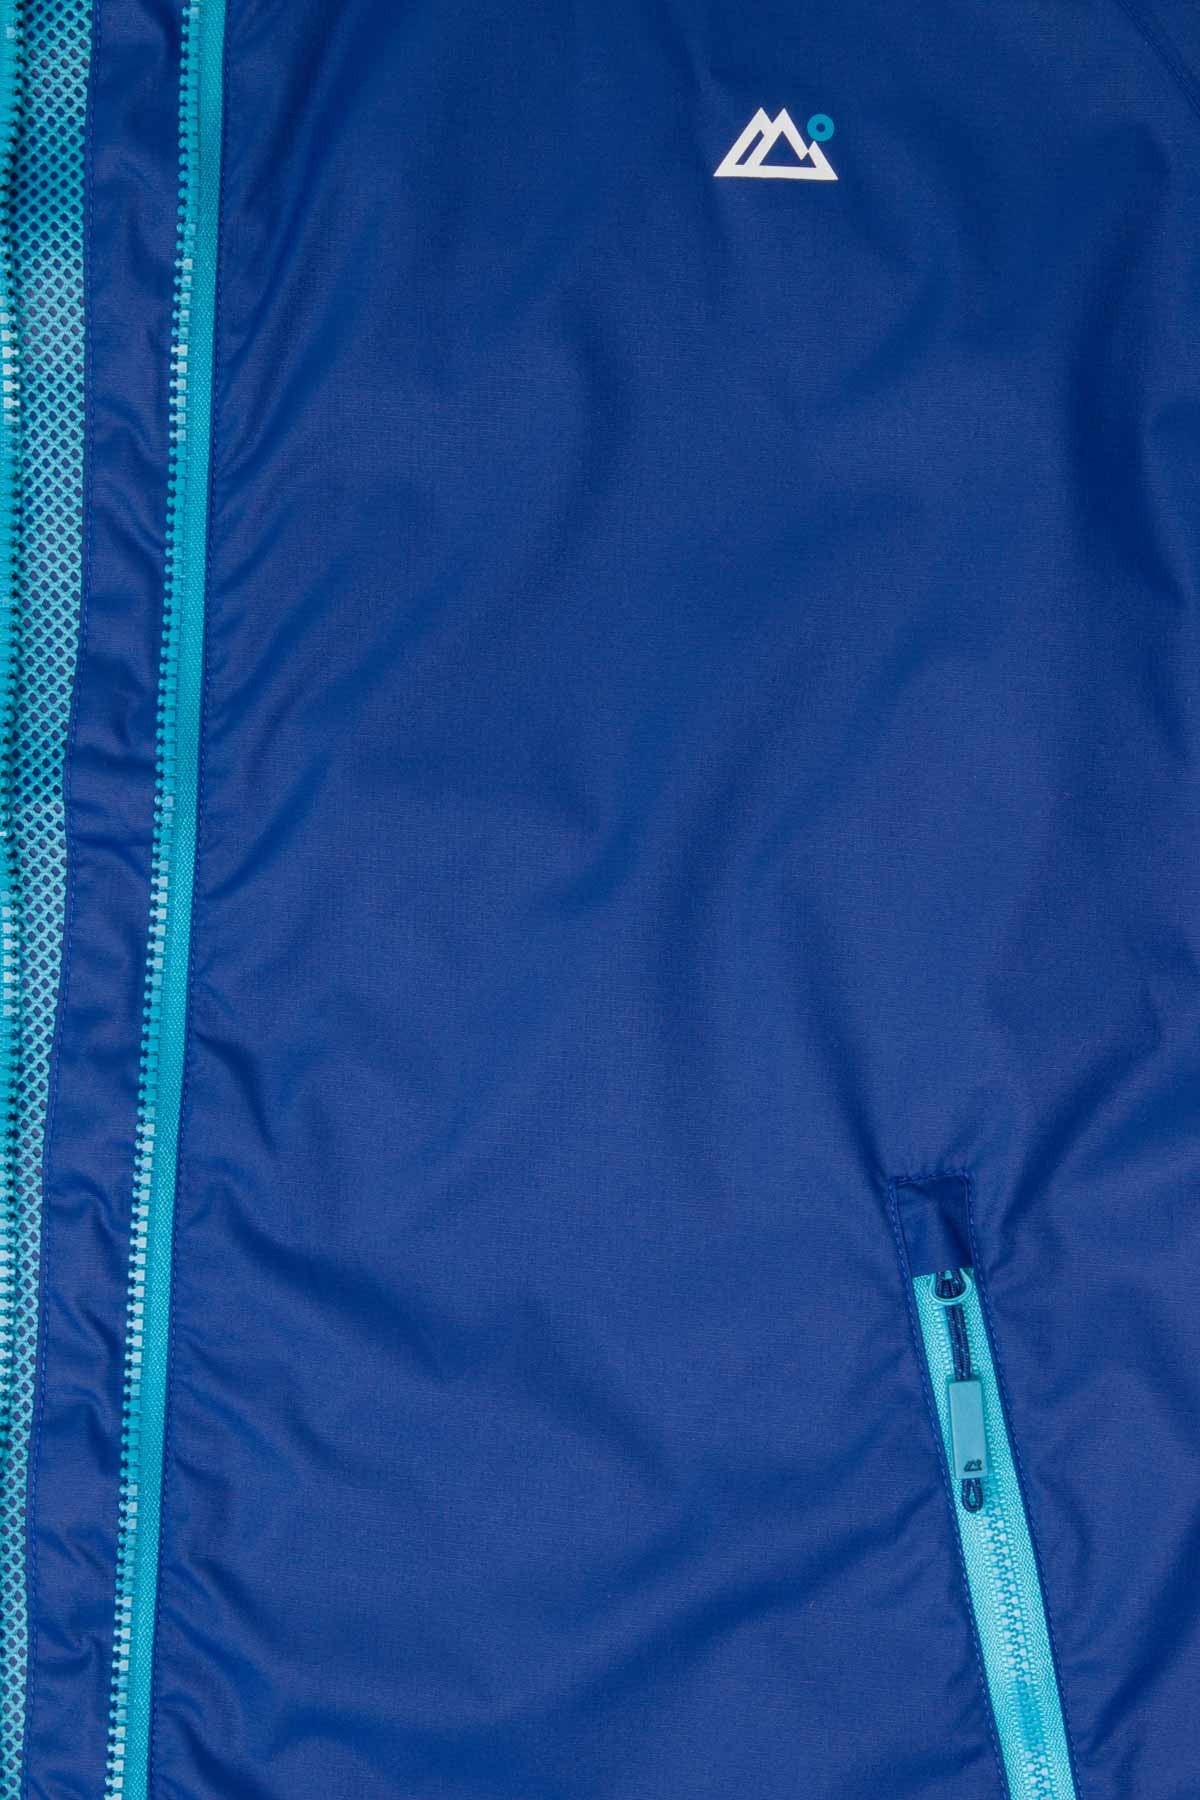 Xtreme Series Evolve Waterproof Jacket | Women's Jackets | Target Dry